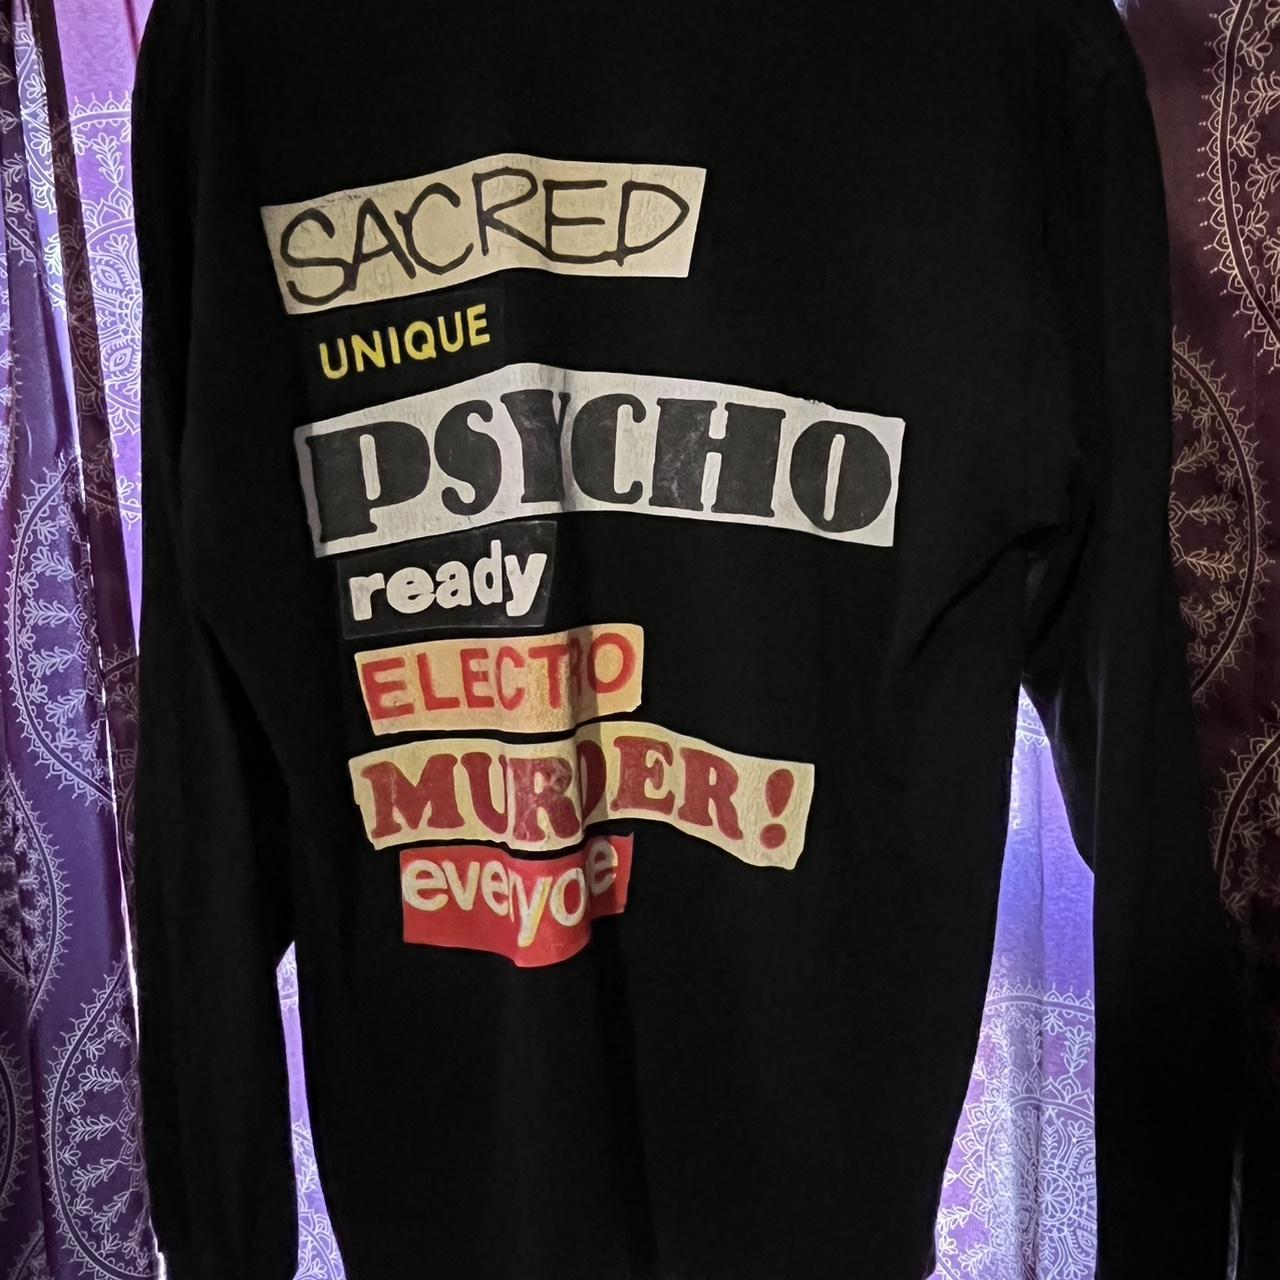 Real Supreme “Sacred, Unique, Psycho” t-shirt...